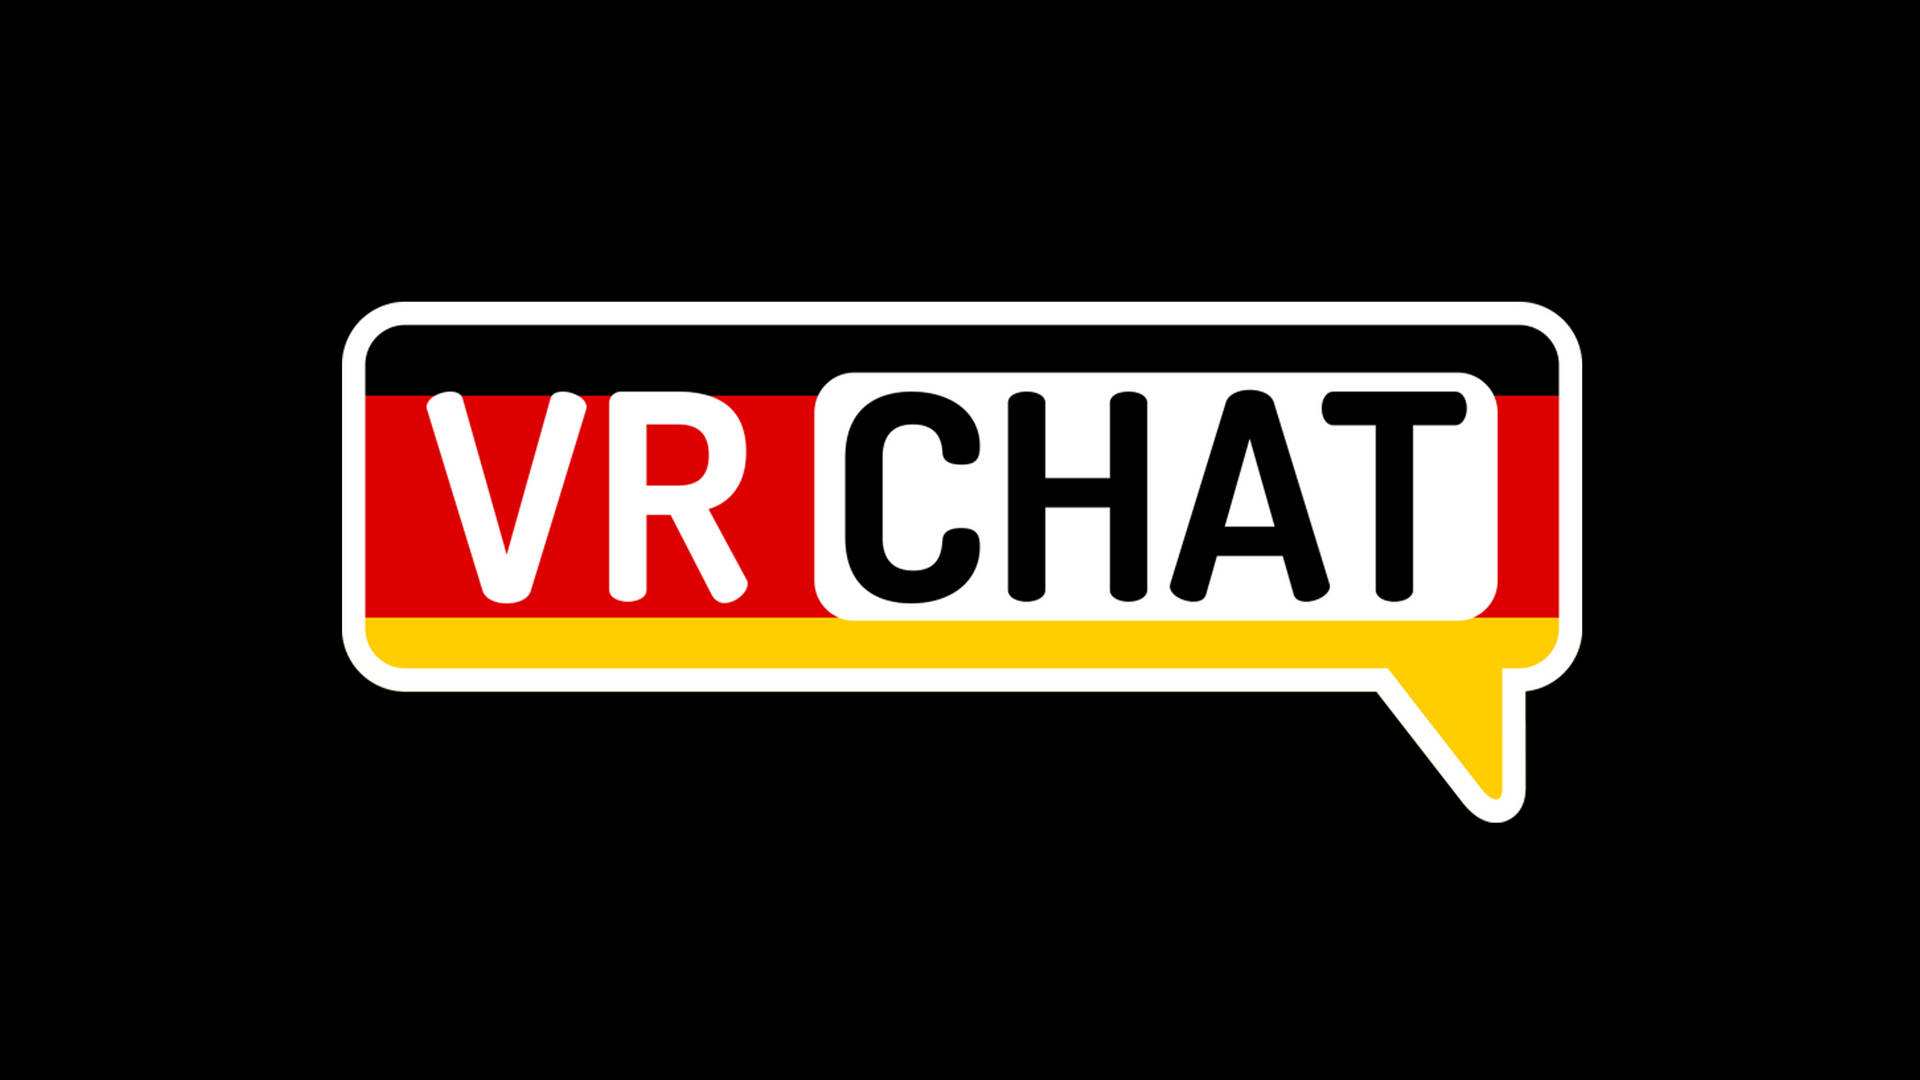 Vrchat Logo Illustration Background